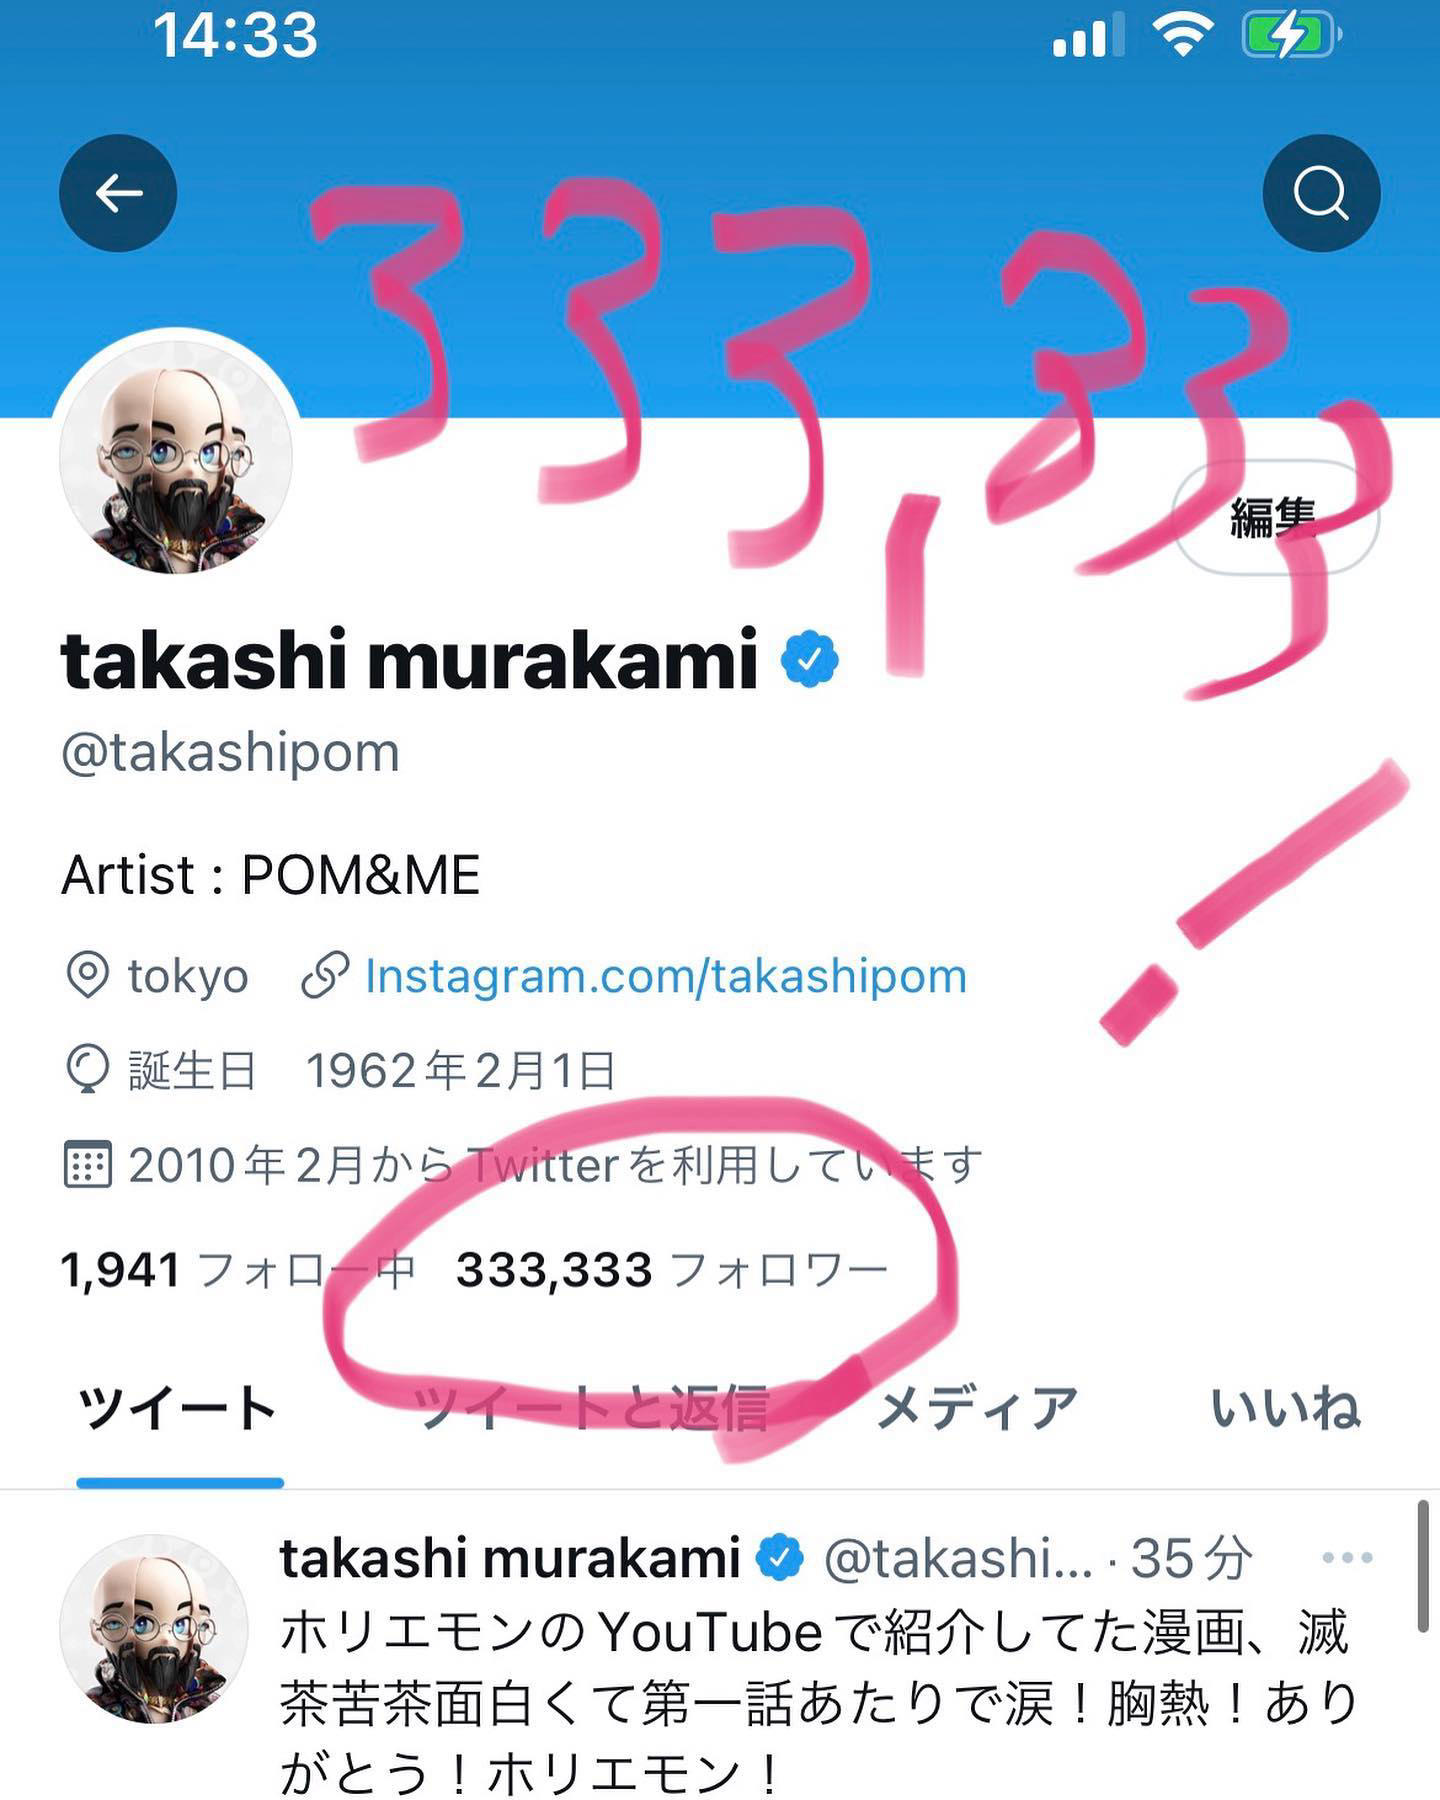 Takashi Murakami - My Twitter follower now333,333